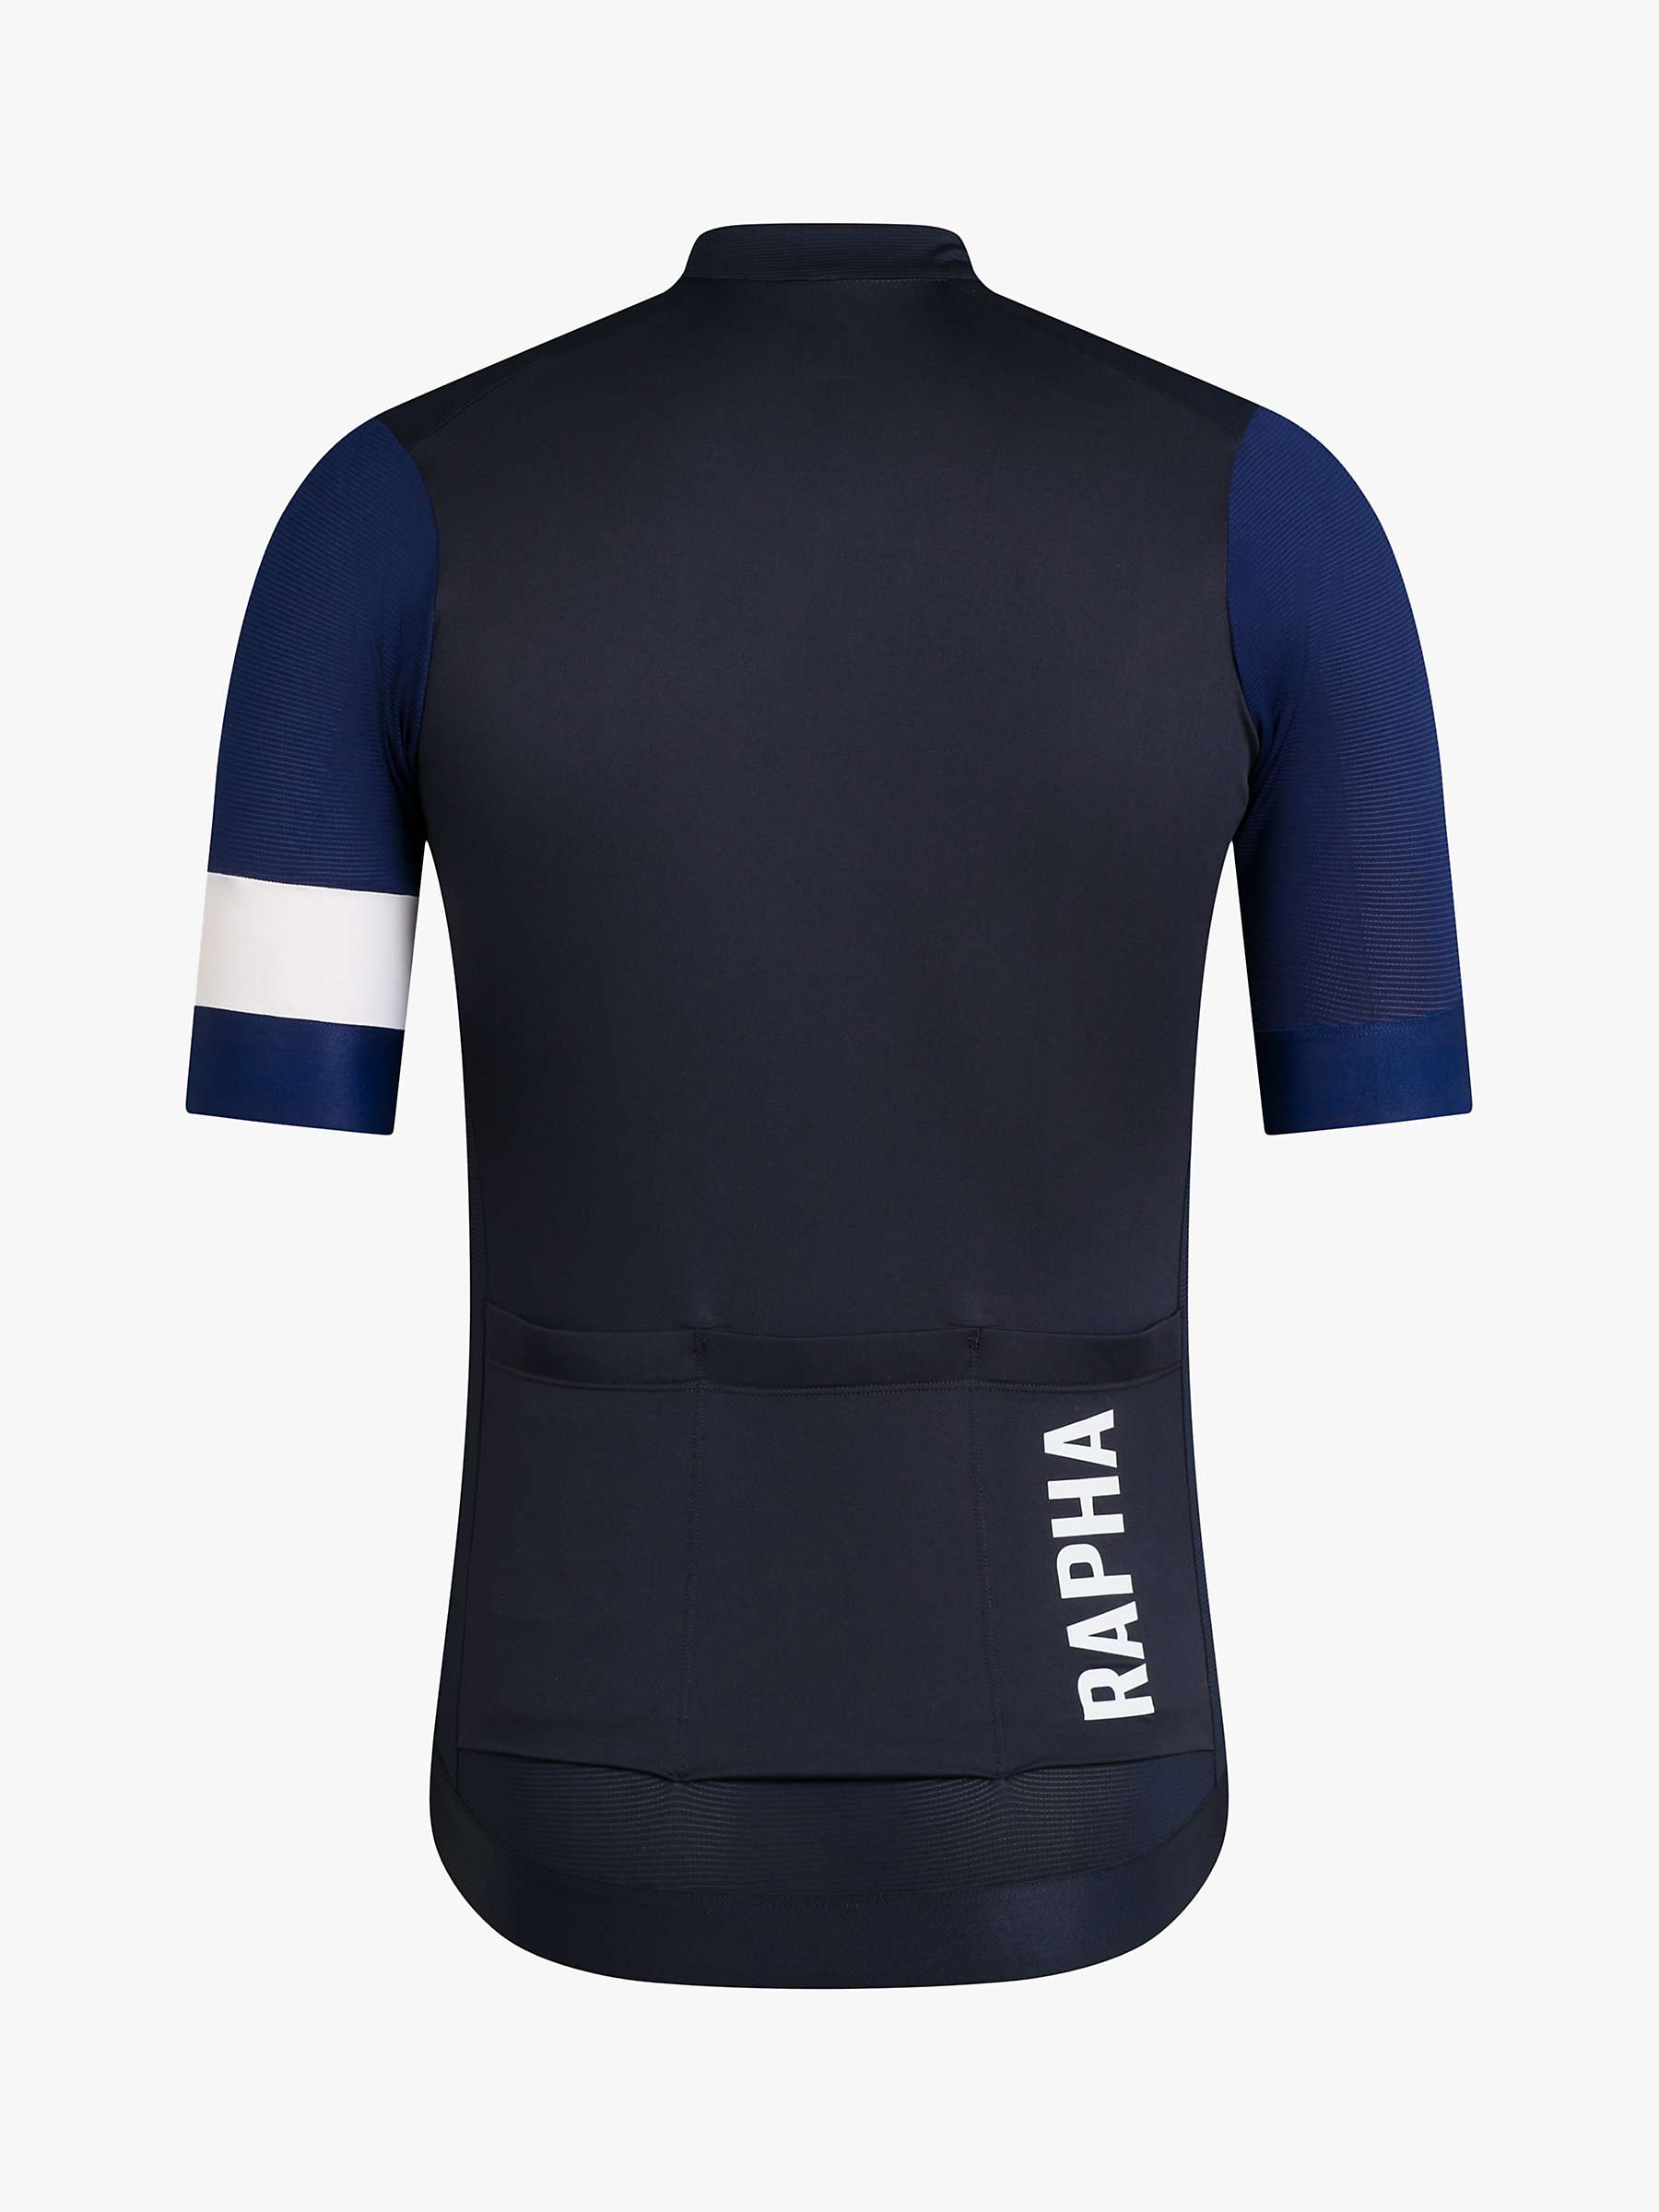 Rapha Rapha Mens Pro Team Training Jersey Size L Navy pattern  